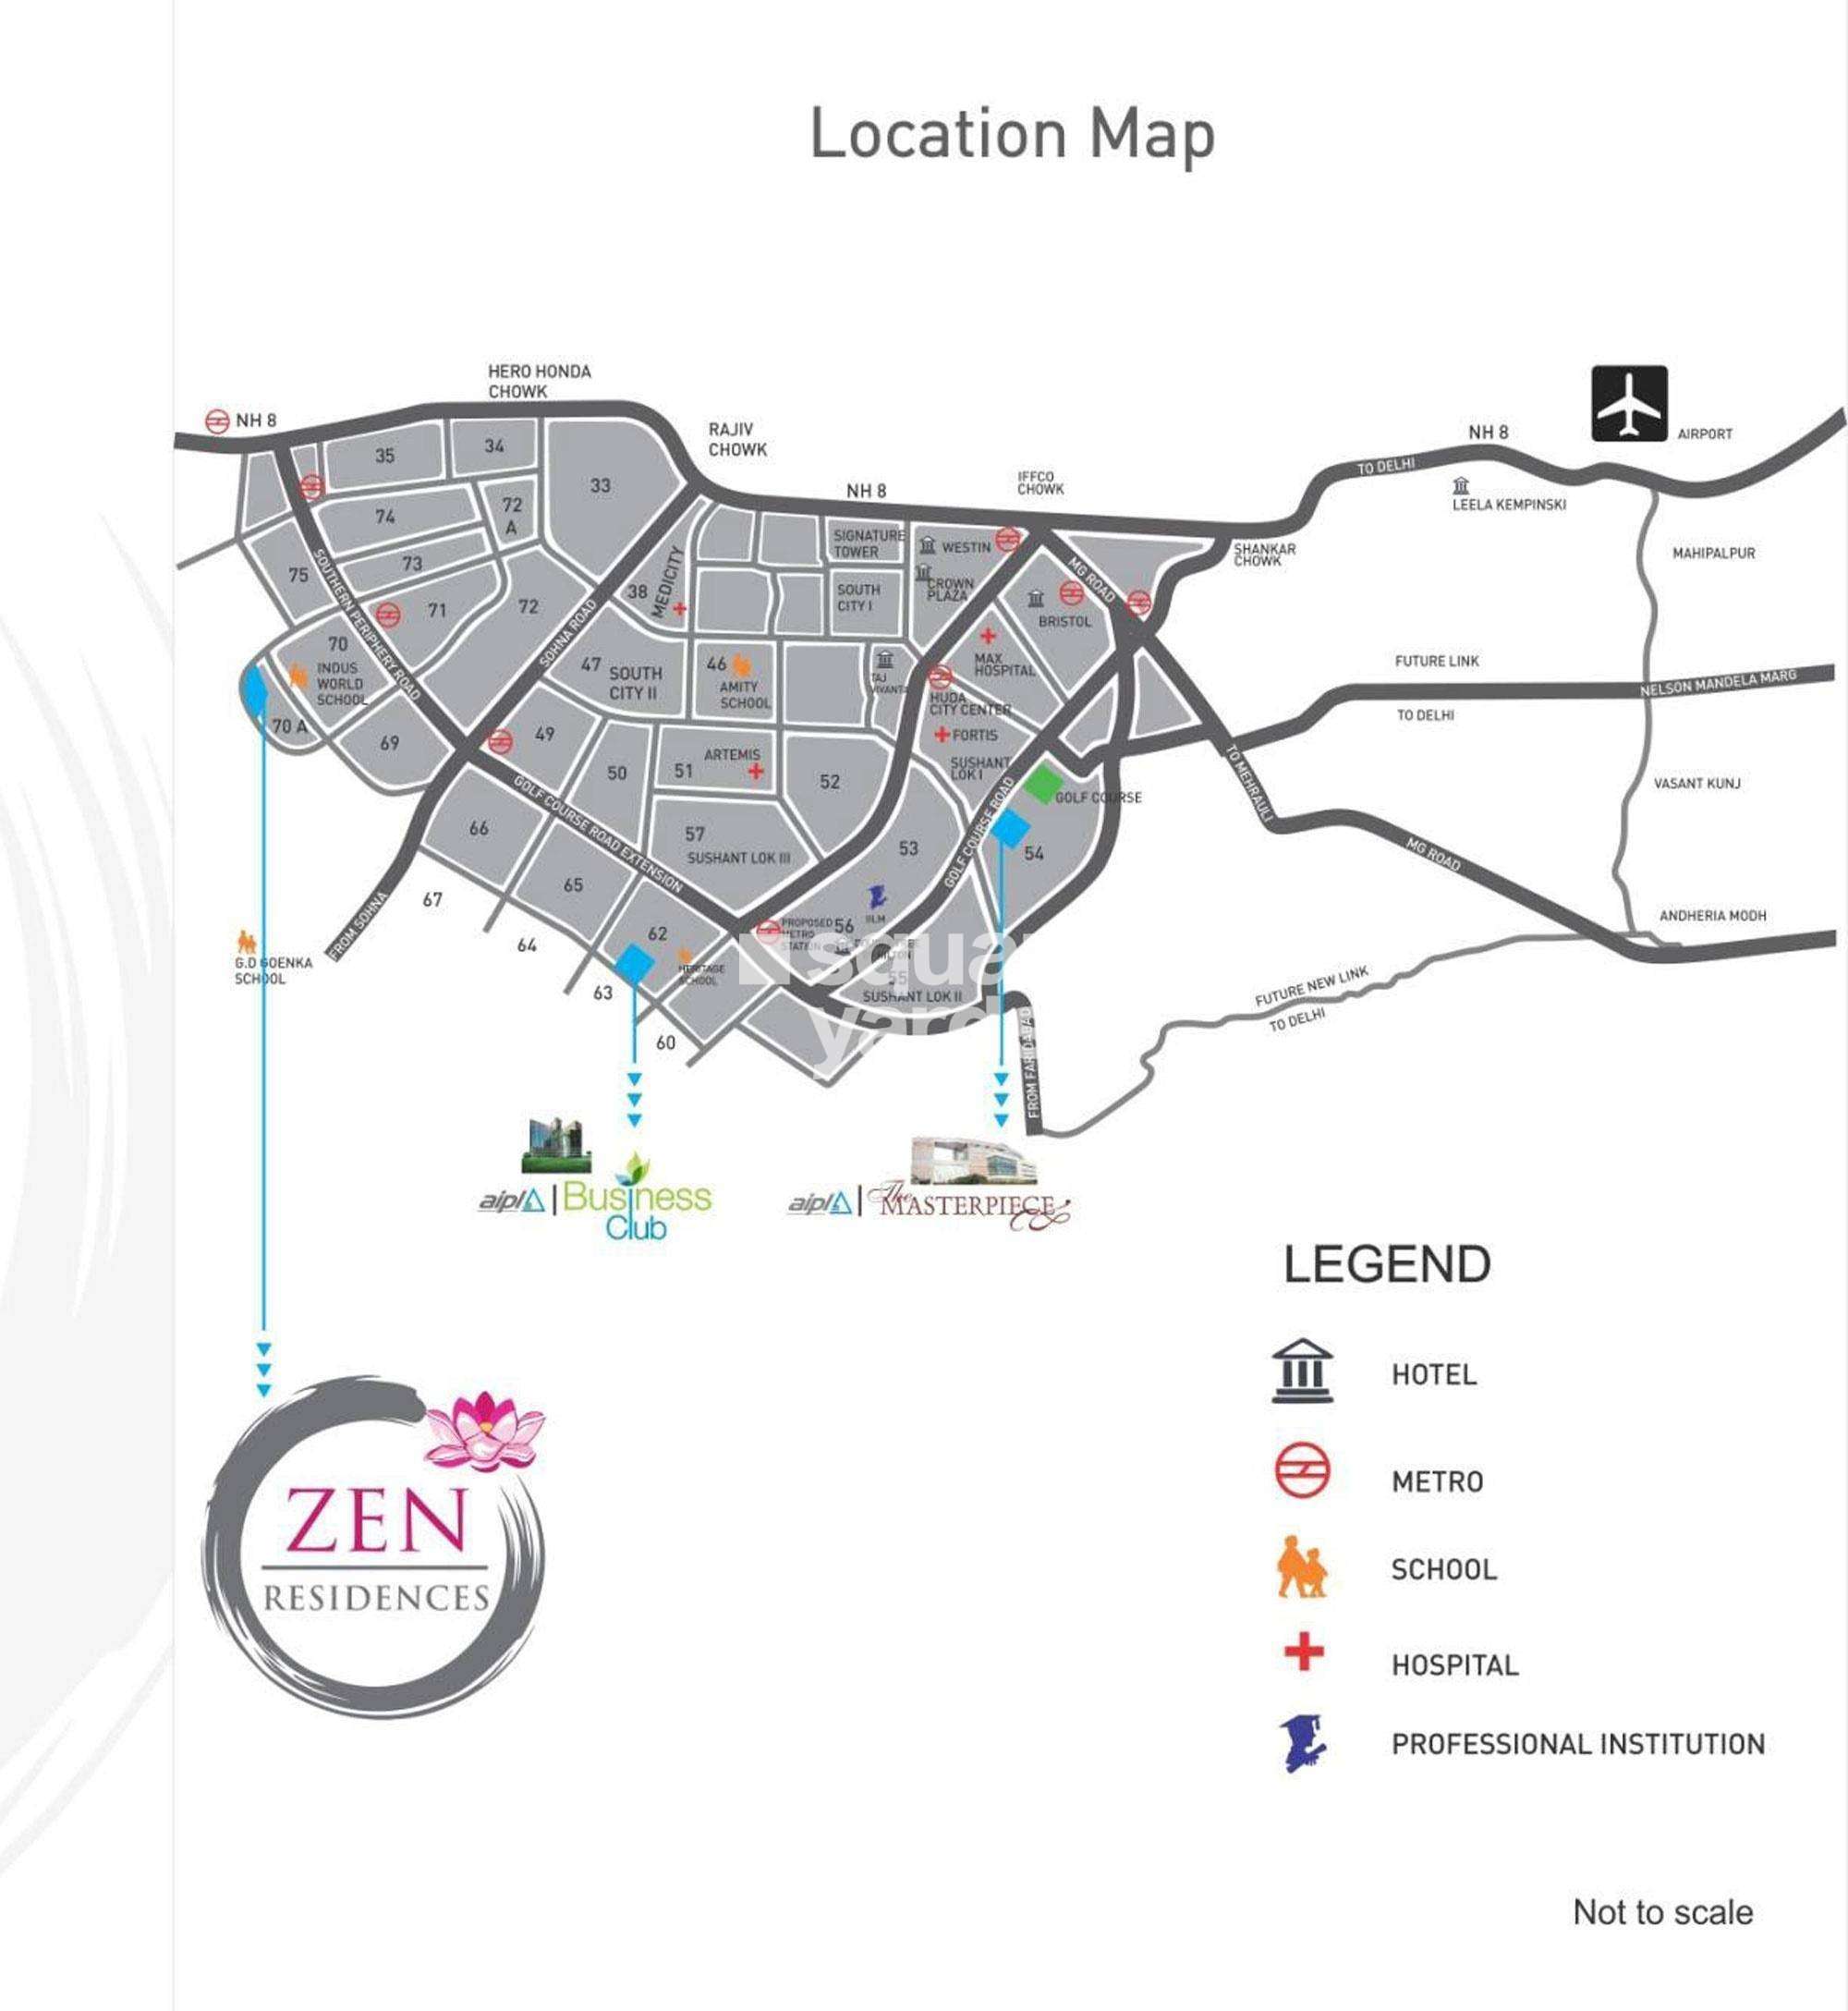 aipl zen residences location image1